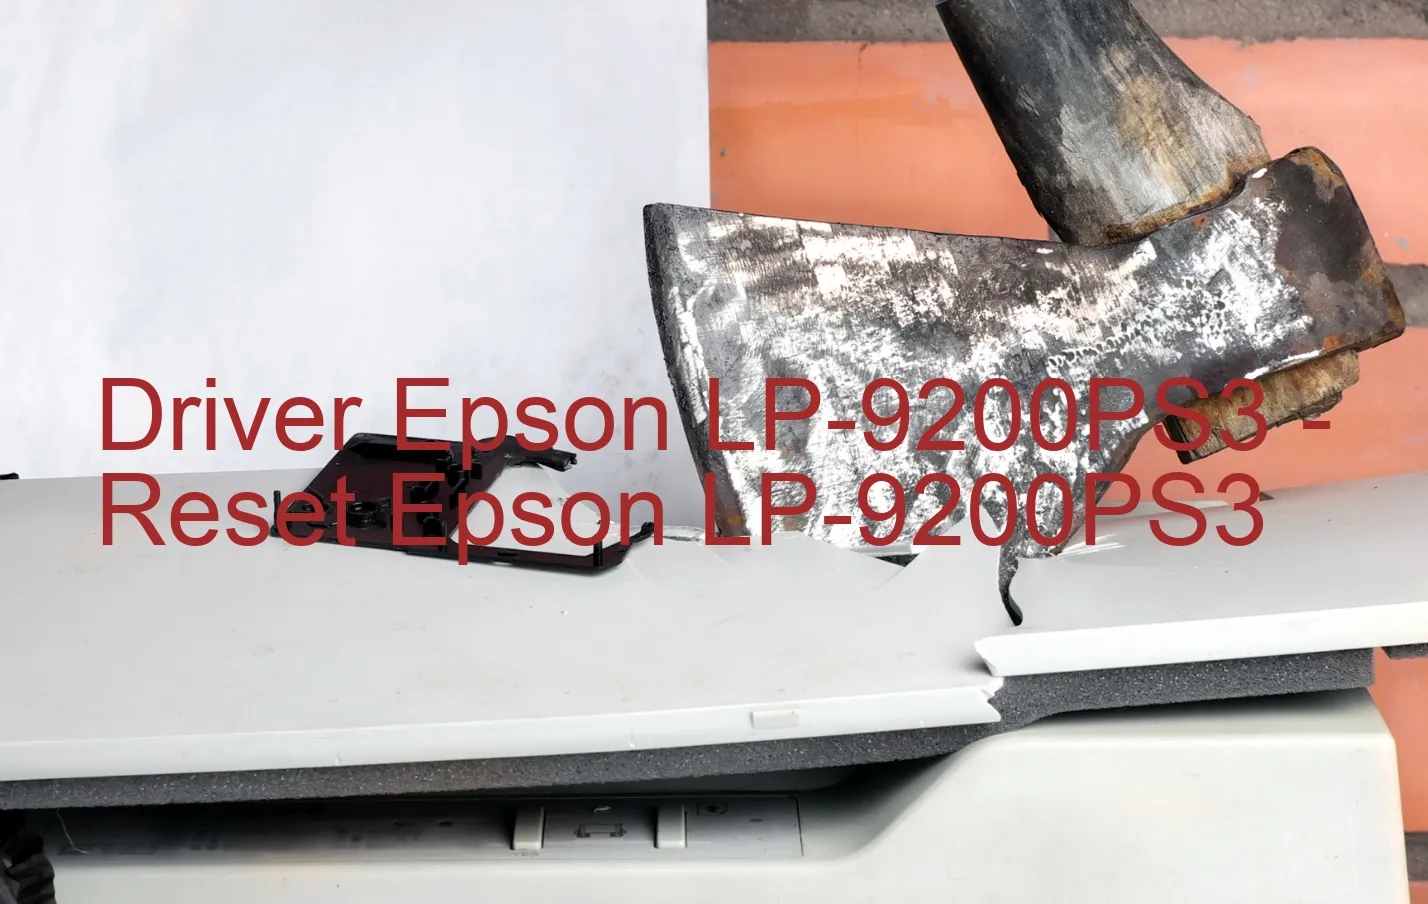 Epson LP-9200PS3のドライバー、Epson LP-9200PS3のリセットソフトウェア